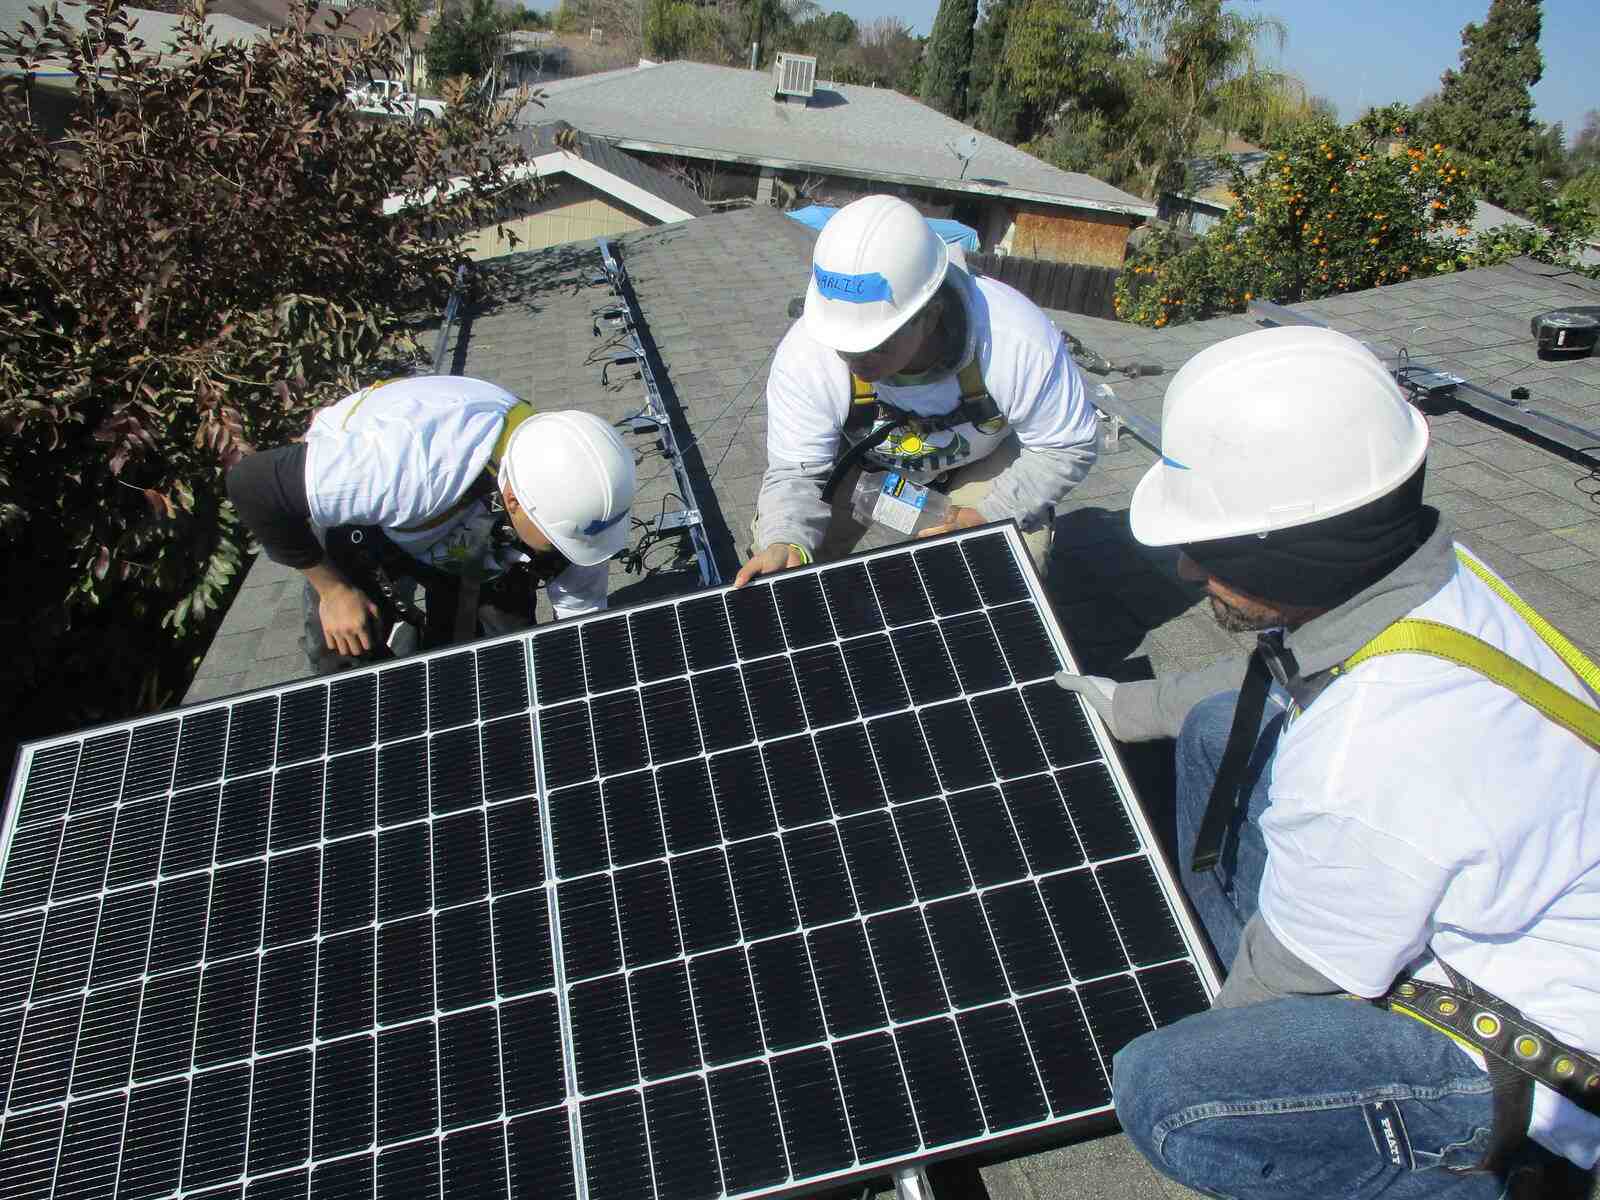 How long do solar panels realistically last?